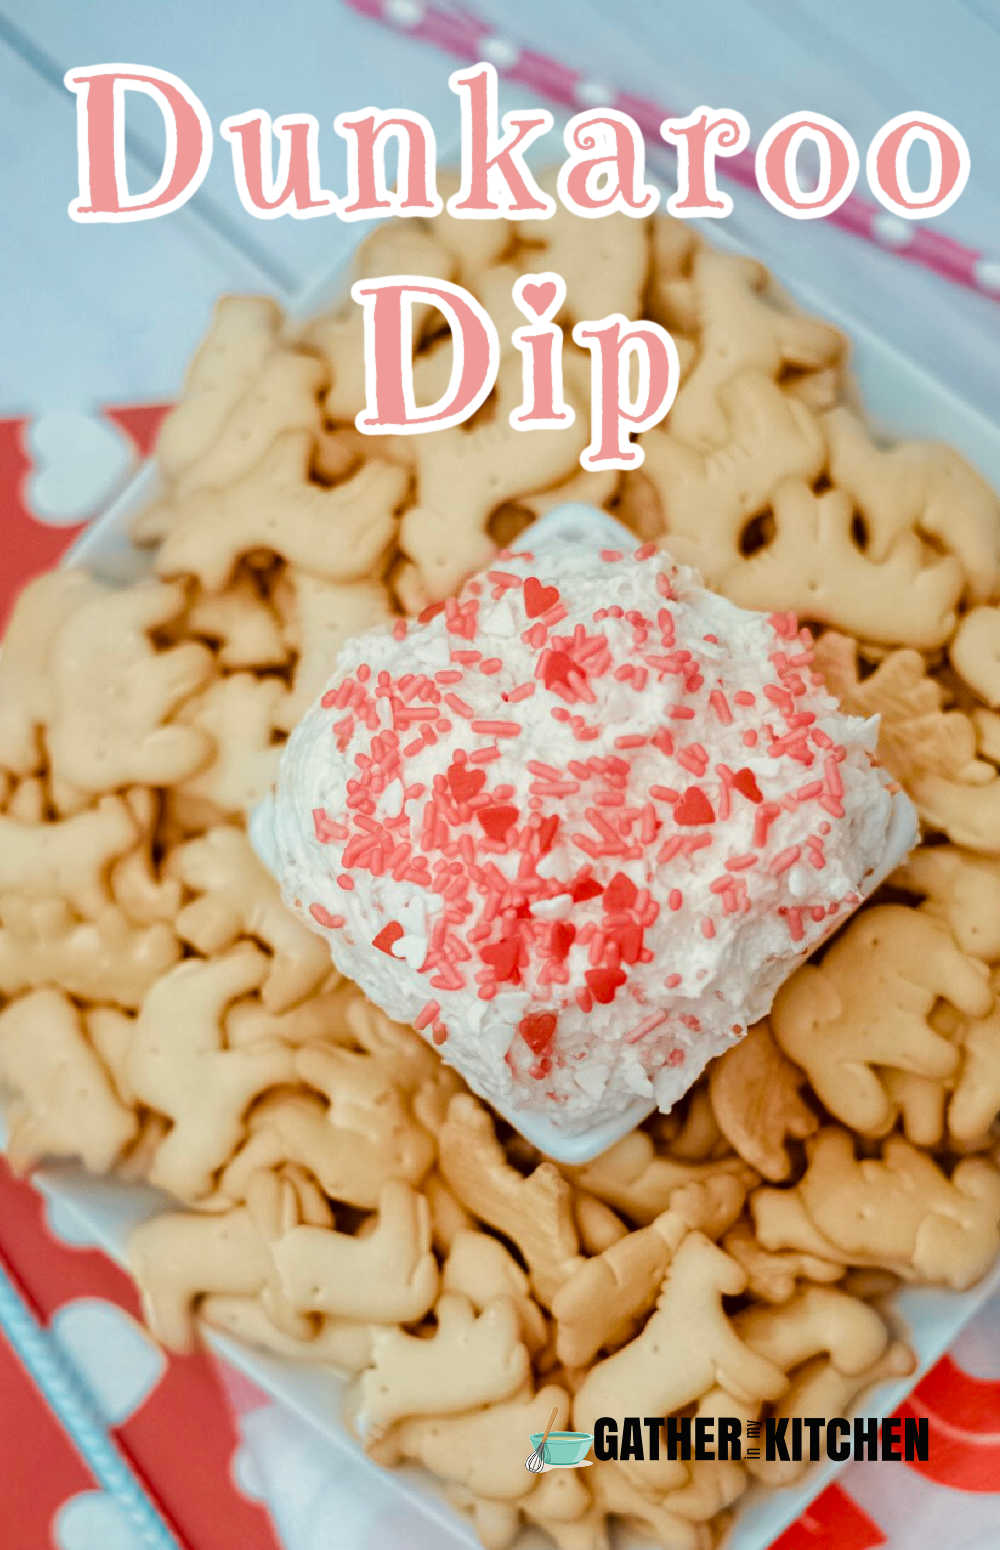 Pin image: dunkaroo dip and crackers with words "Dunkaroo Dip" overlaid.